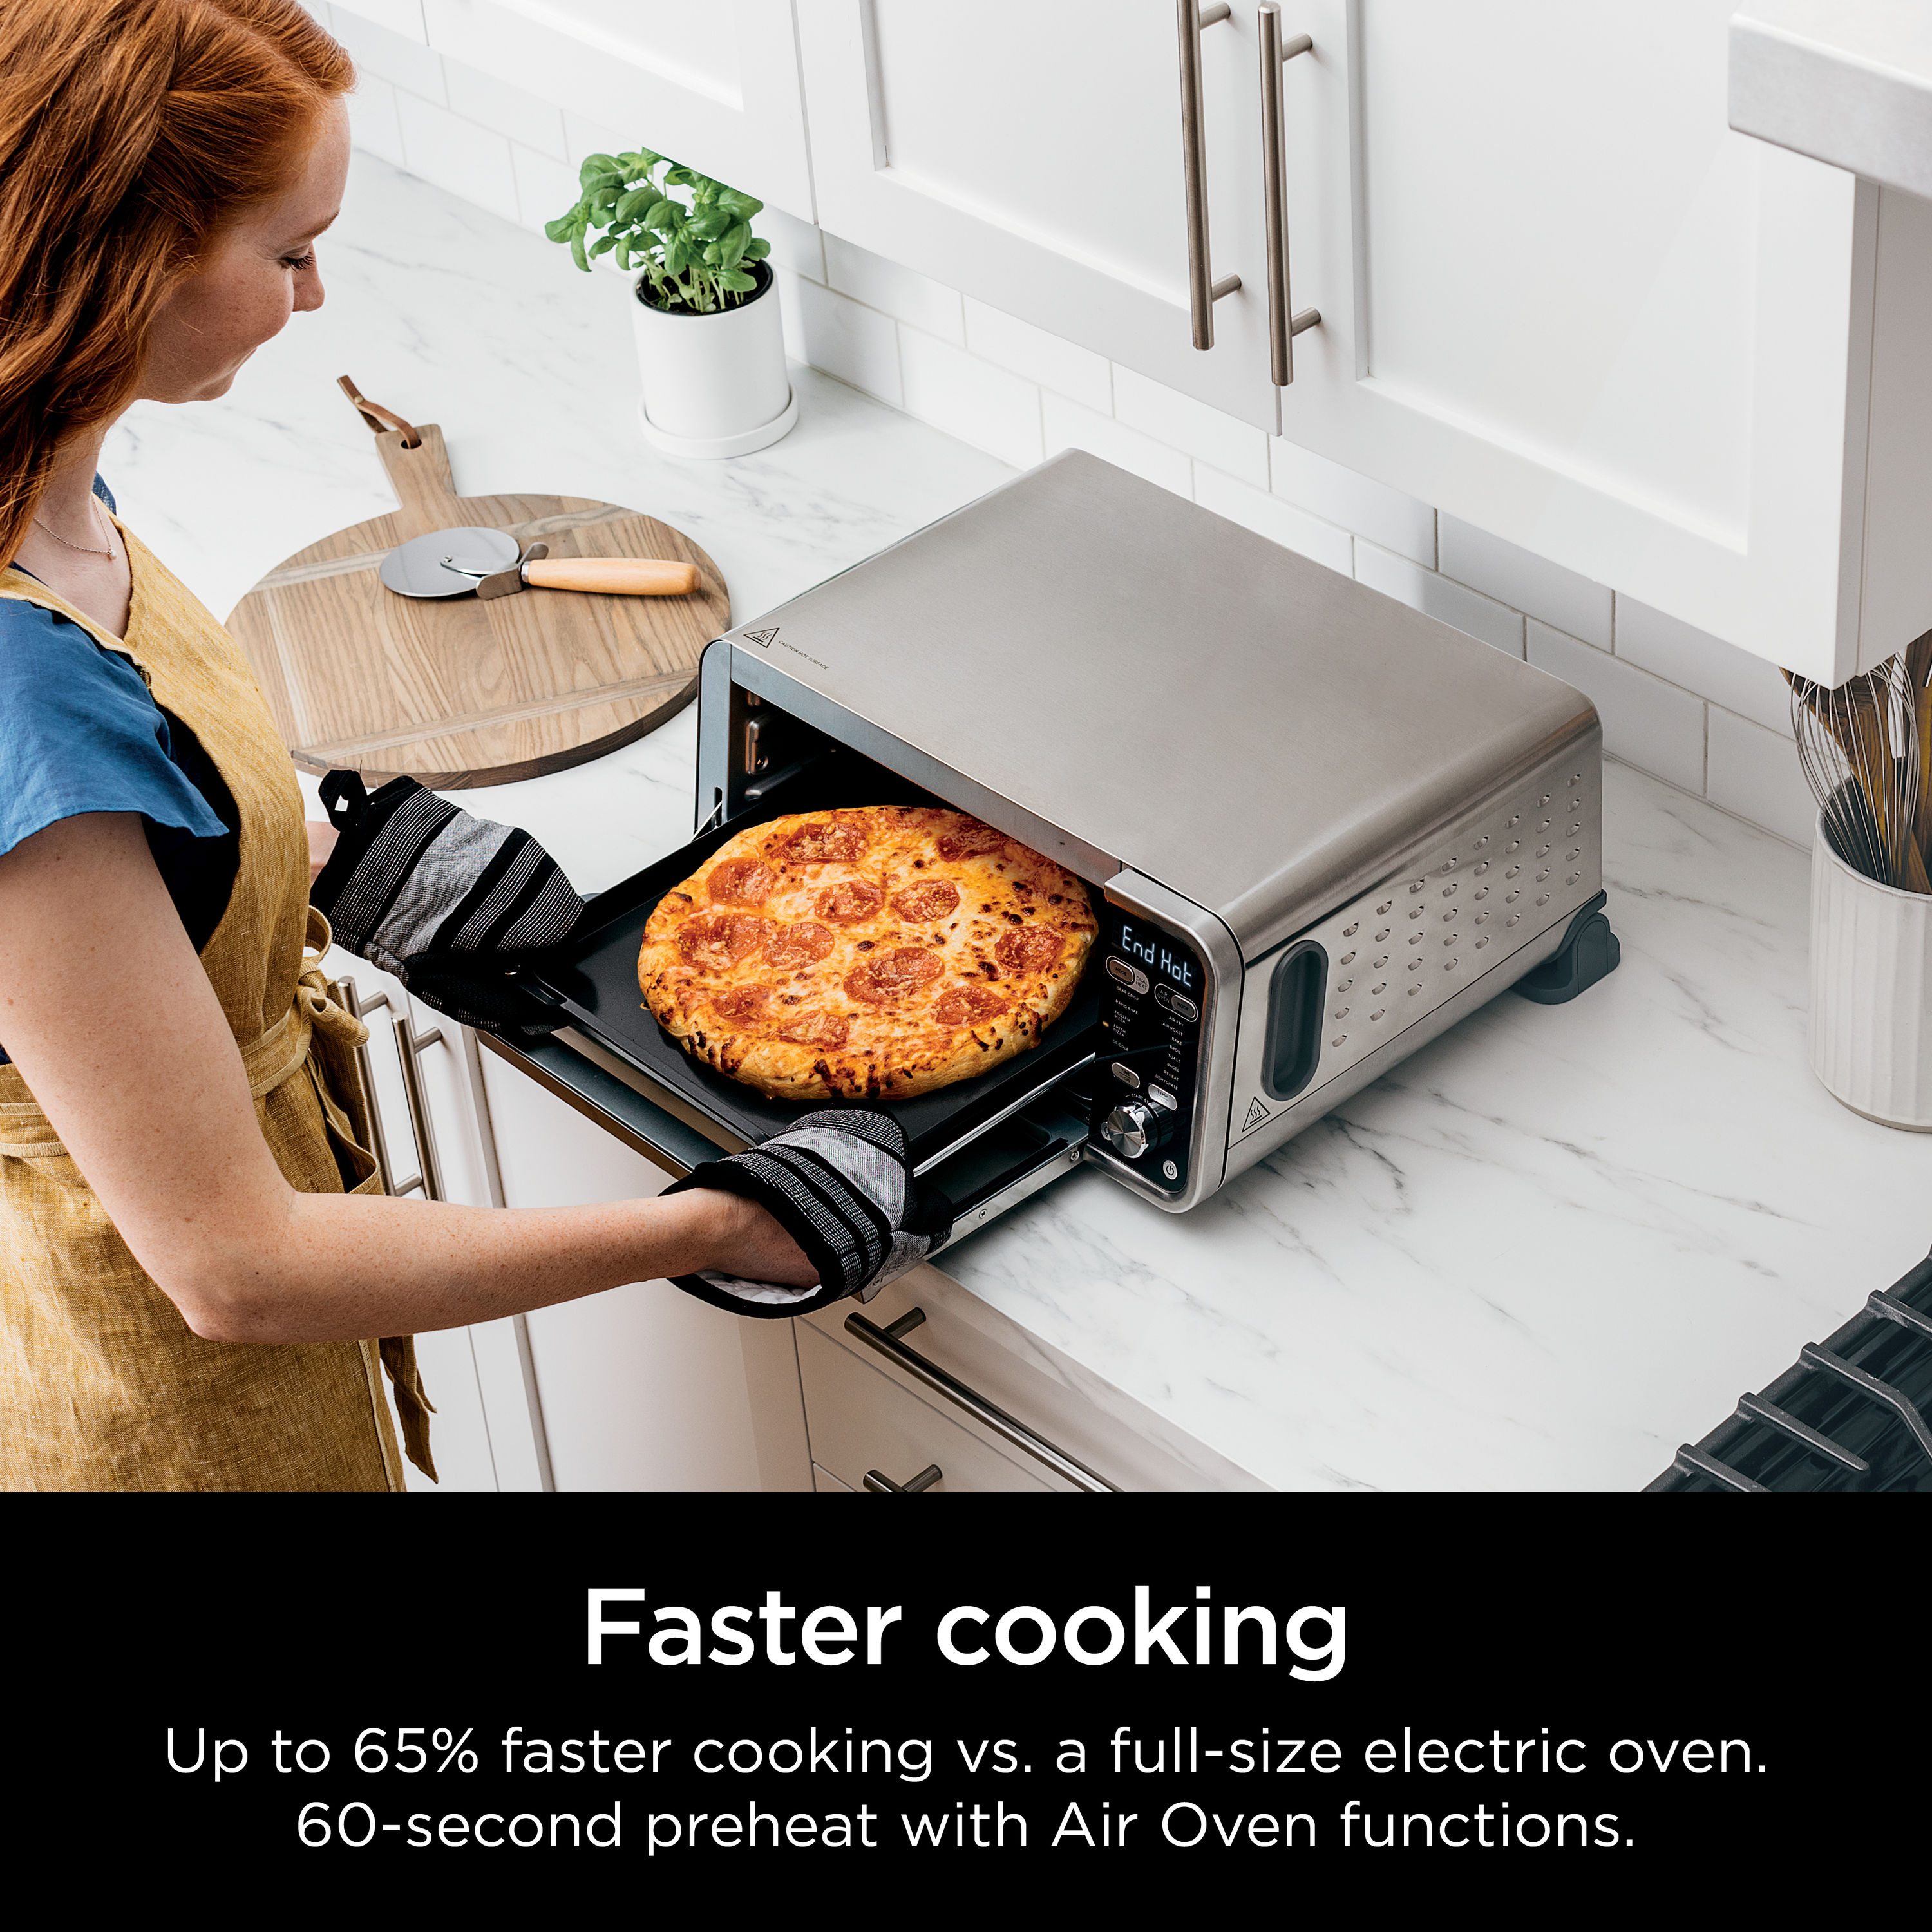 Ninja SF301 Speedi Rapid Cooker & Air Fryer – PzDeals